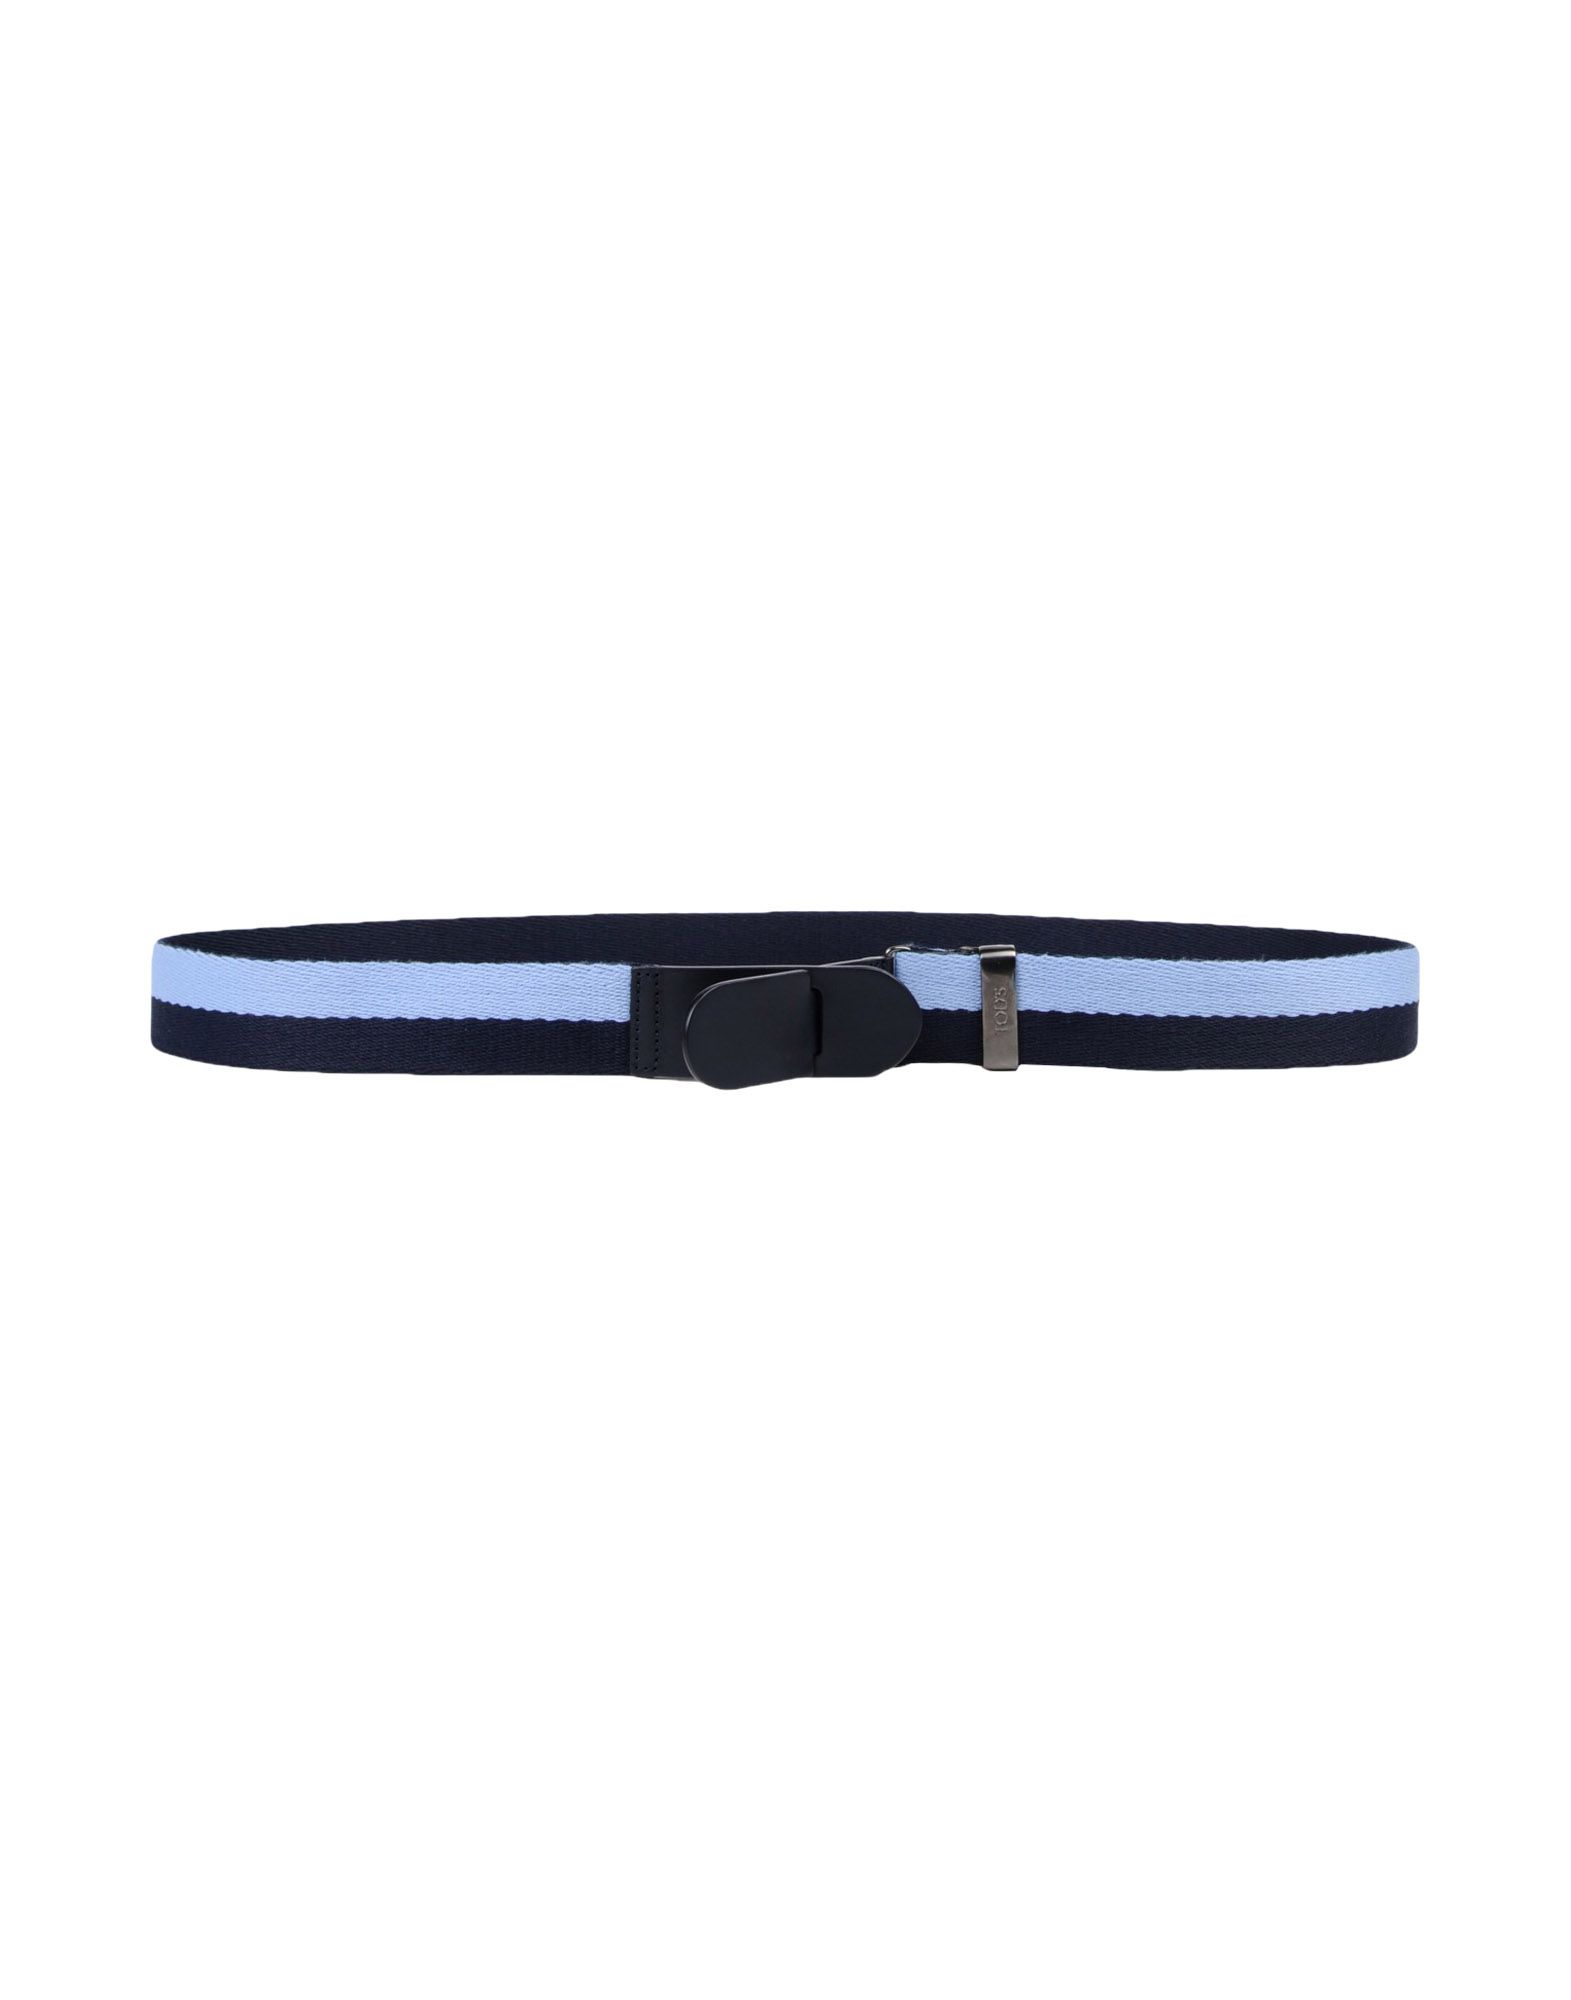 TOD'S Fabric belt,46581253BE 7